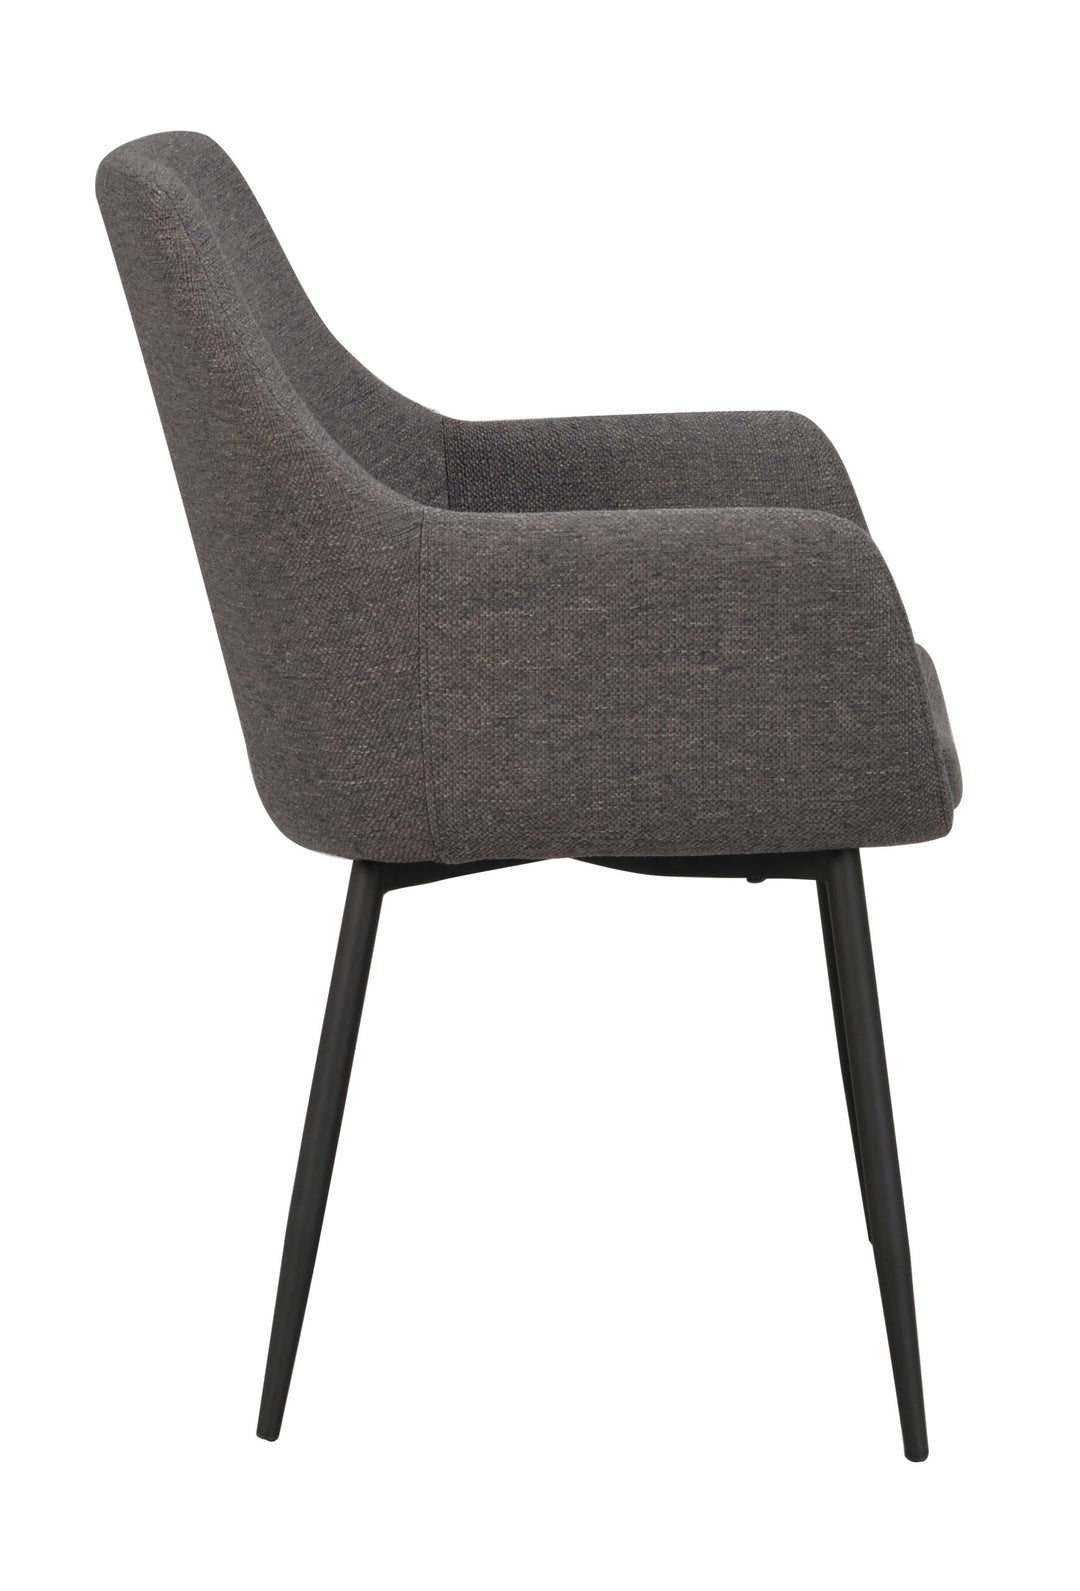 110458_c, Reily arm chair, grey fabric_black